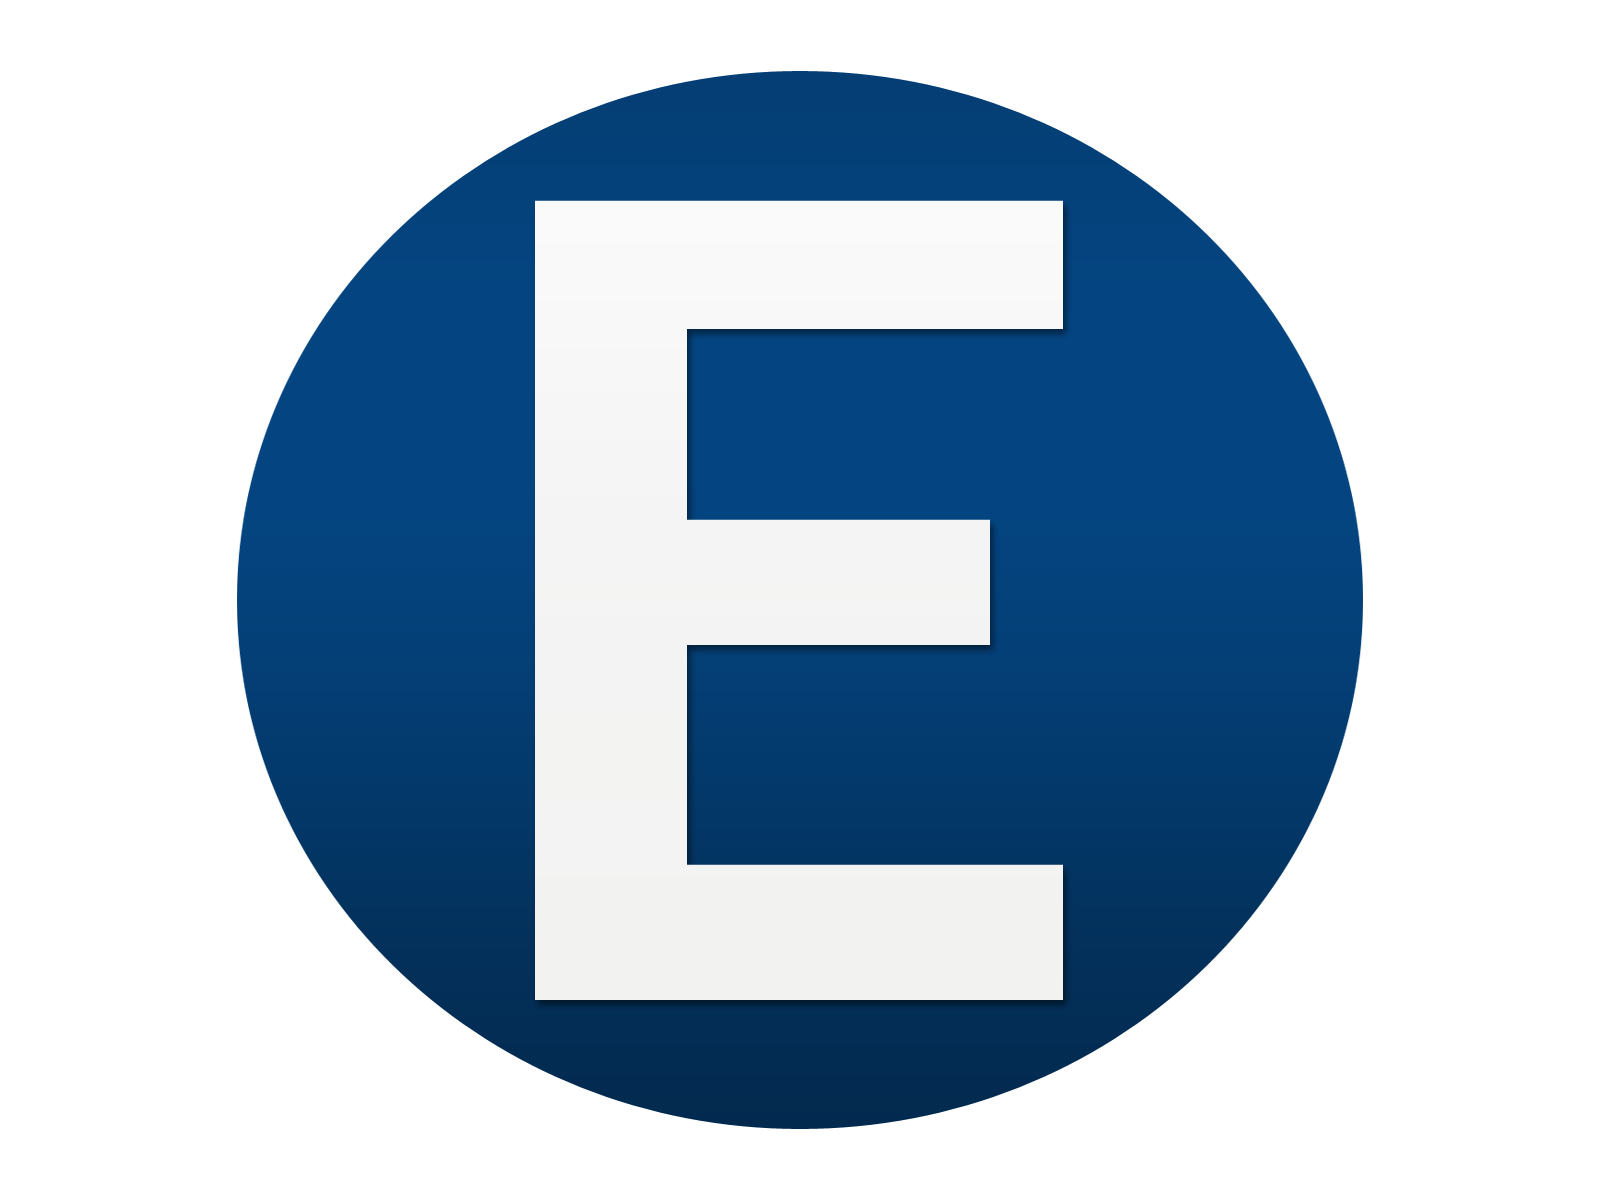 Blue and White E Logo - Blue White Letter E Logo Design PNG « Free To Use Images & Photos ...